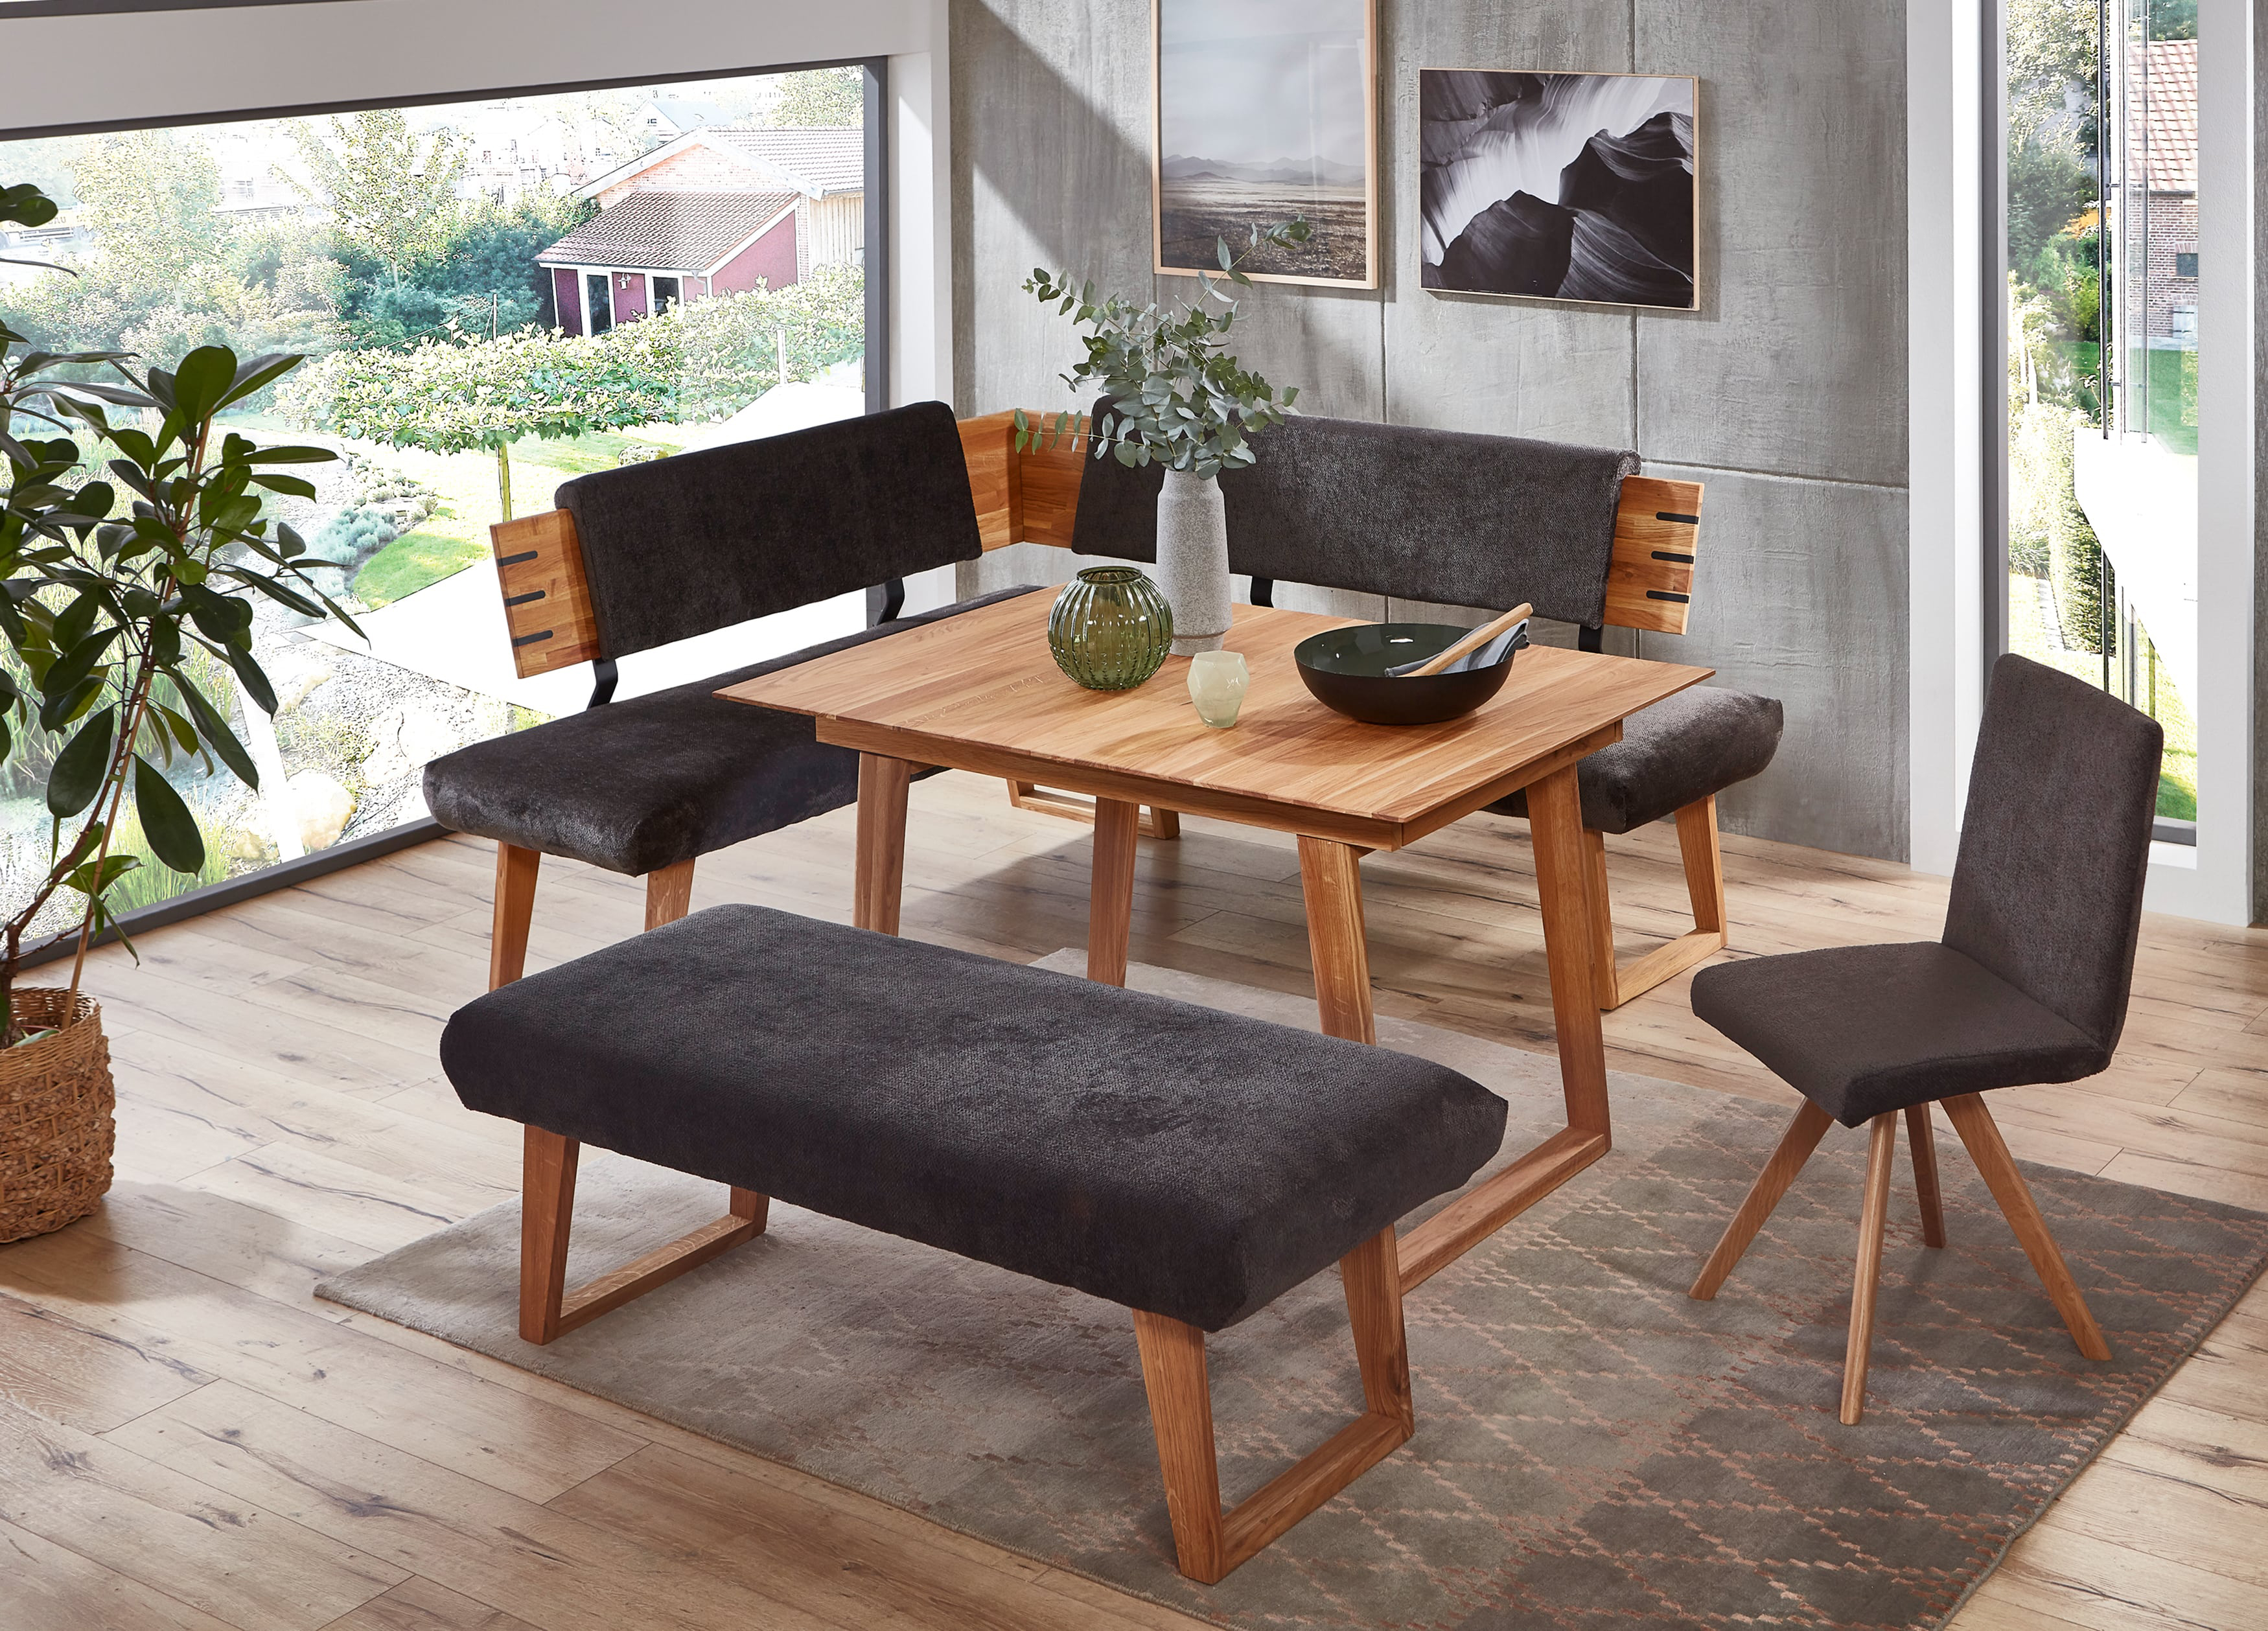 Standard Furniture Cortina Eckbankgruppe massiv eiche rustikal mit Tisch Rouen